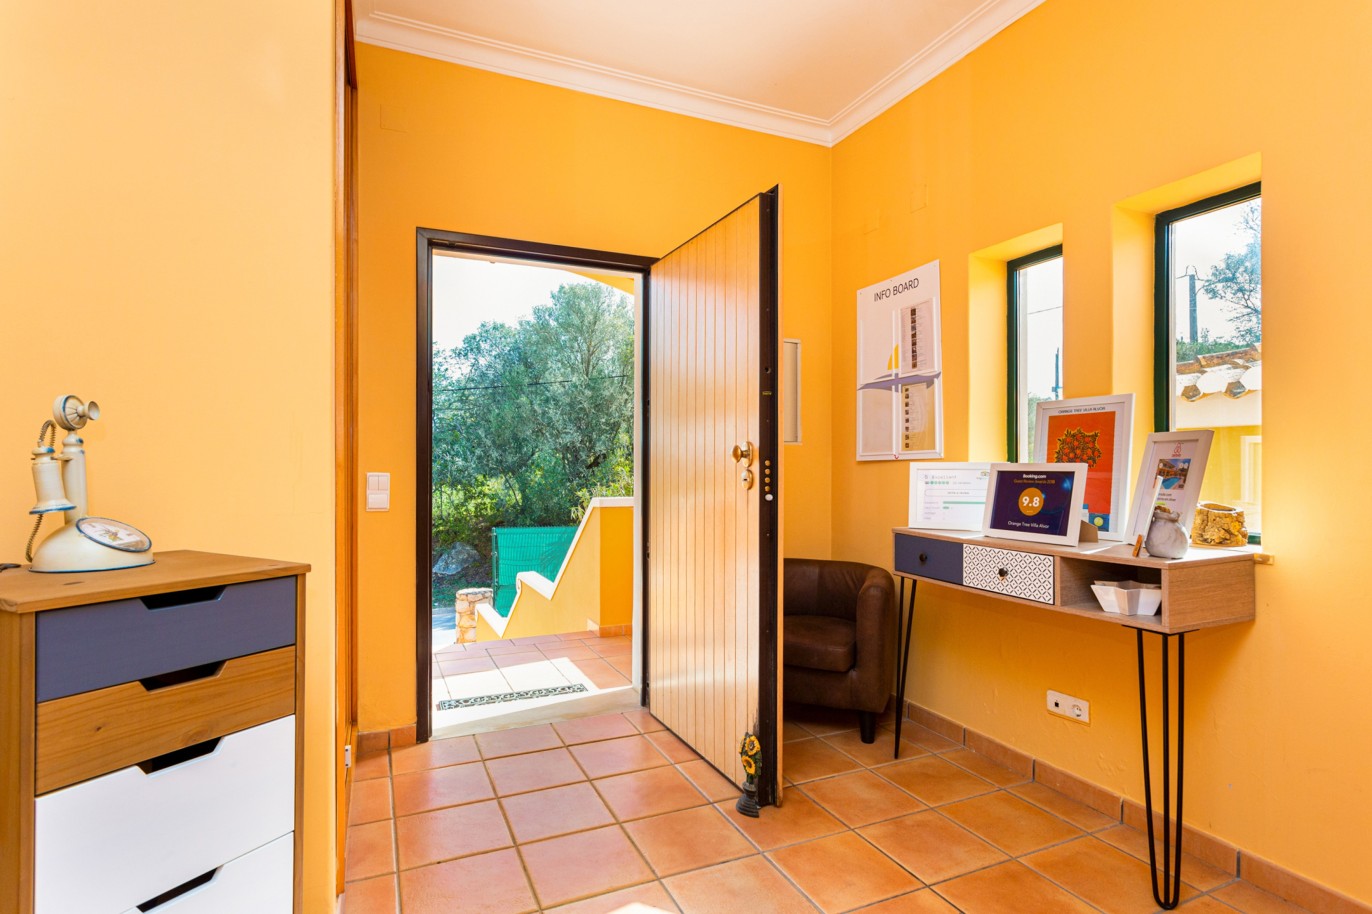 5 Bedroom Villa with 2 Bedroom Annex, for sale, in Alvor, Algarve_220958